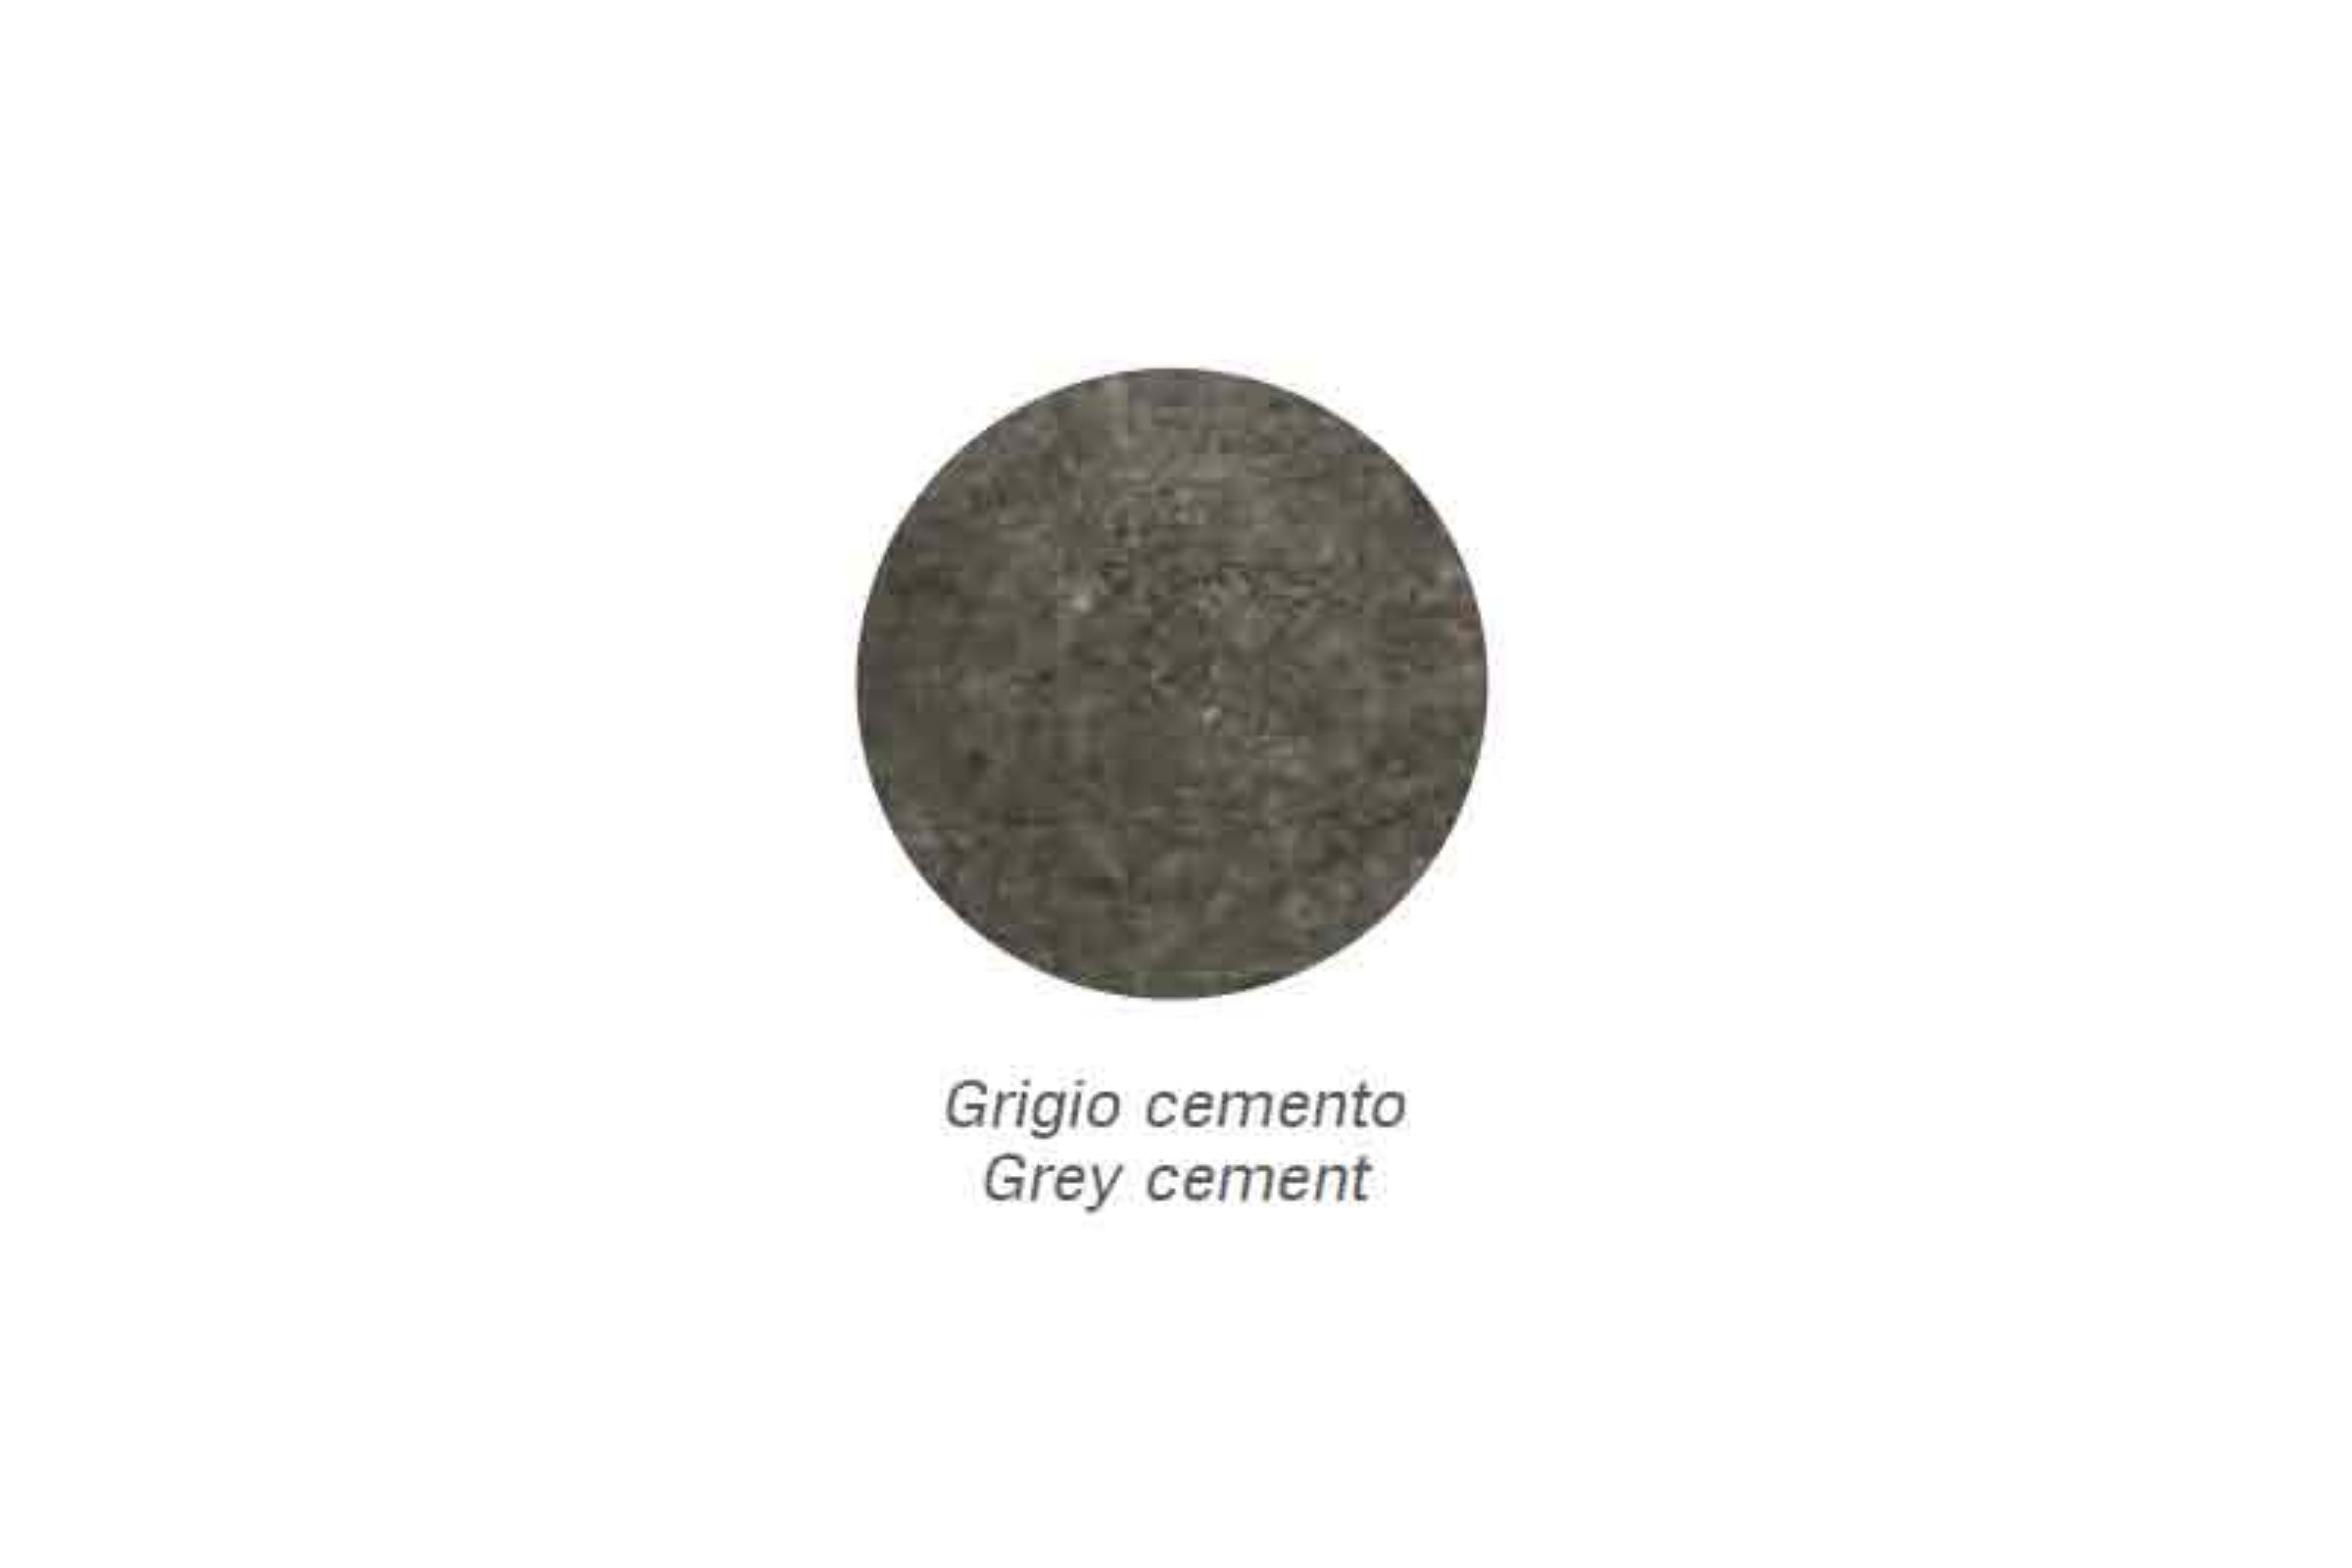 Mensola Zen - Mensola Zen Grigio cemento /30